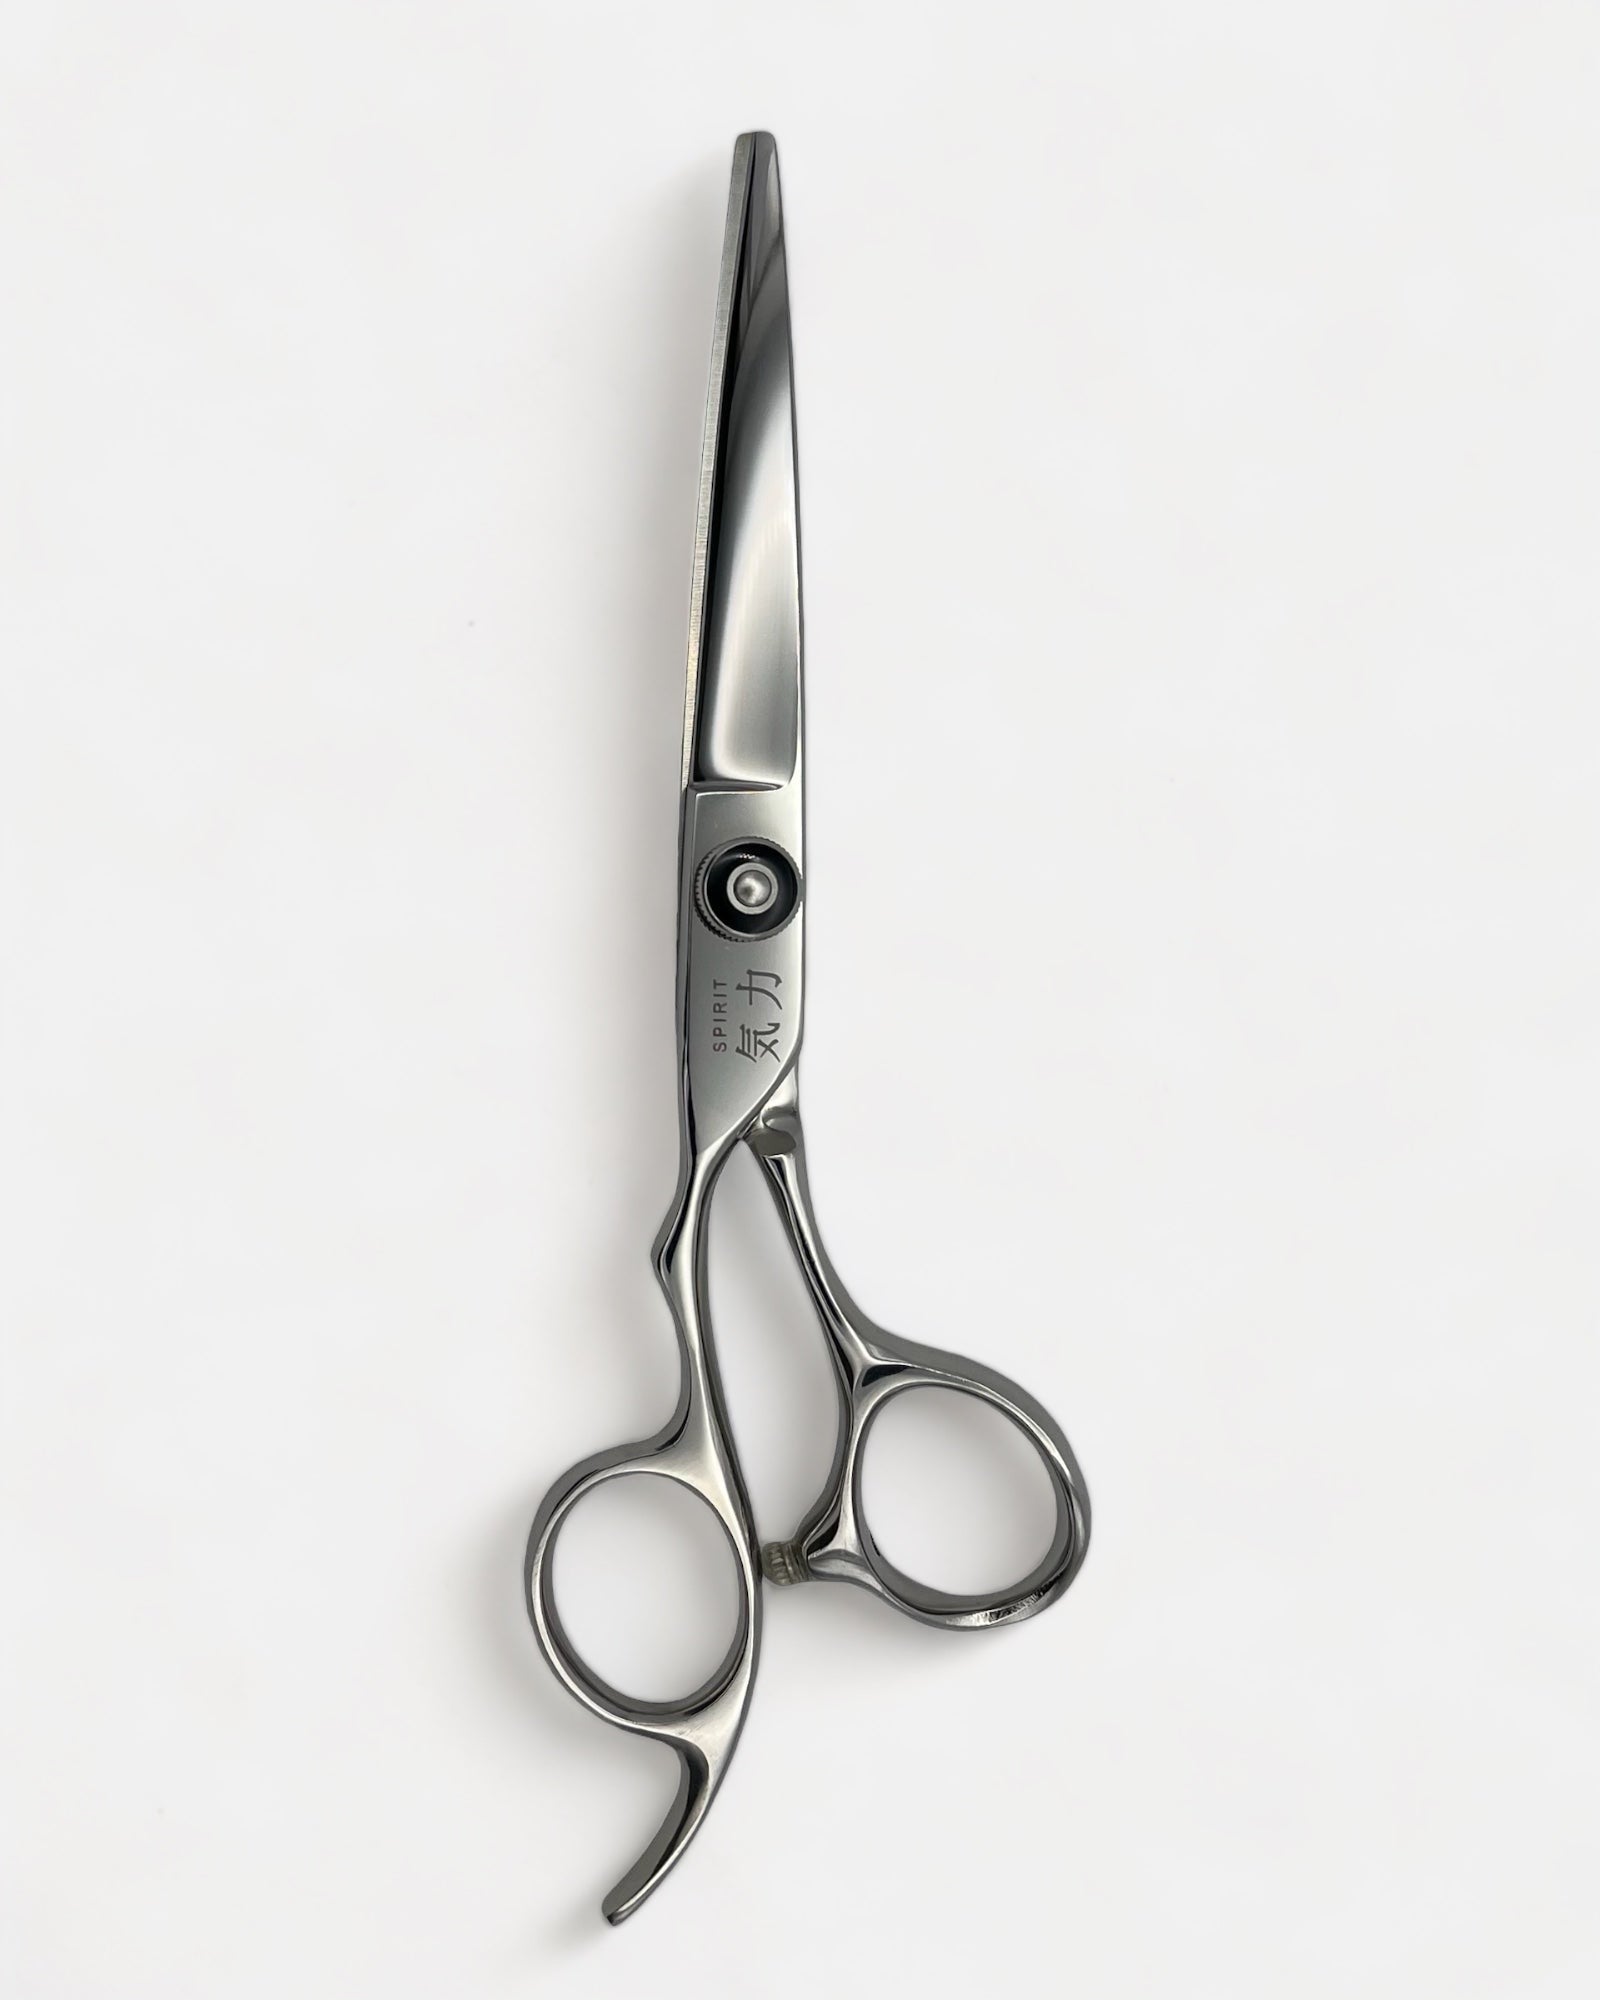 Tijeras para cortar el pelo Misaki - Tijeras Akito - Akito Scissors